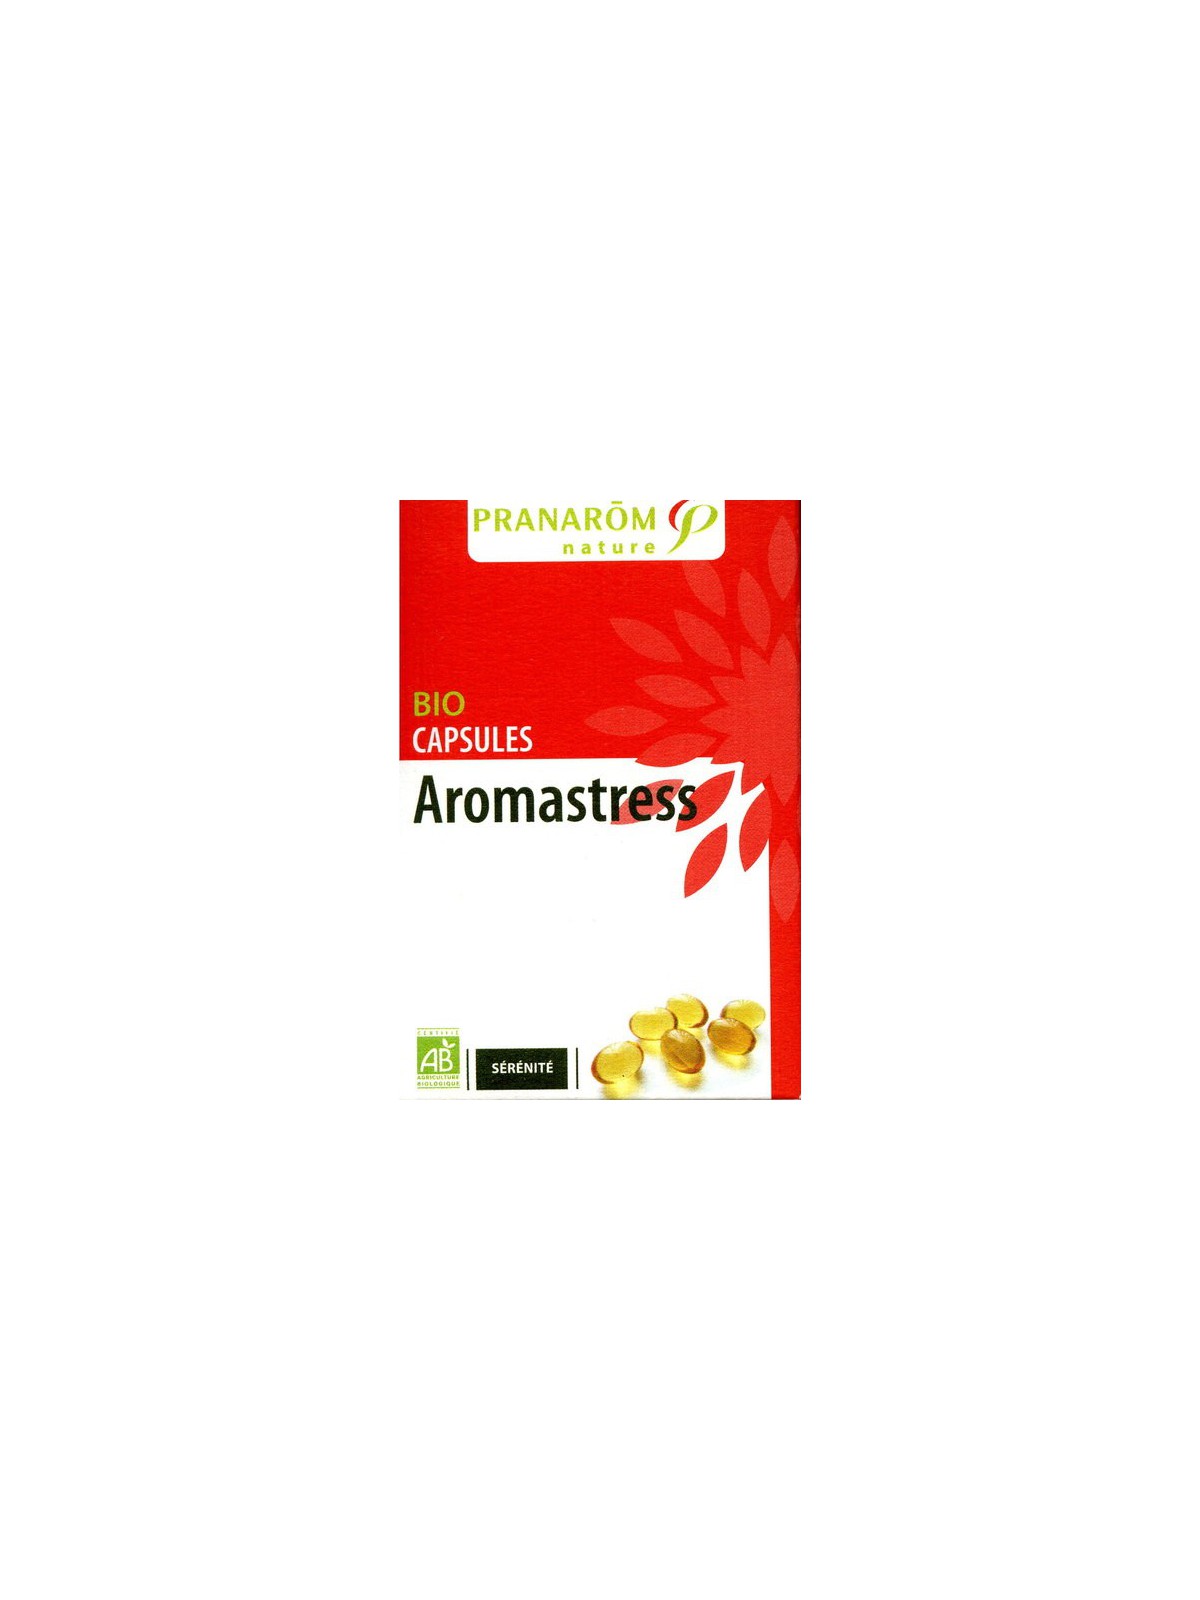 Aromastress BIO capsules aromatiques (stress) de Pranarom